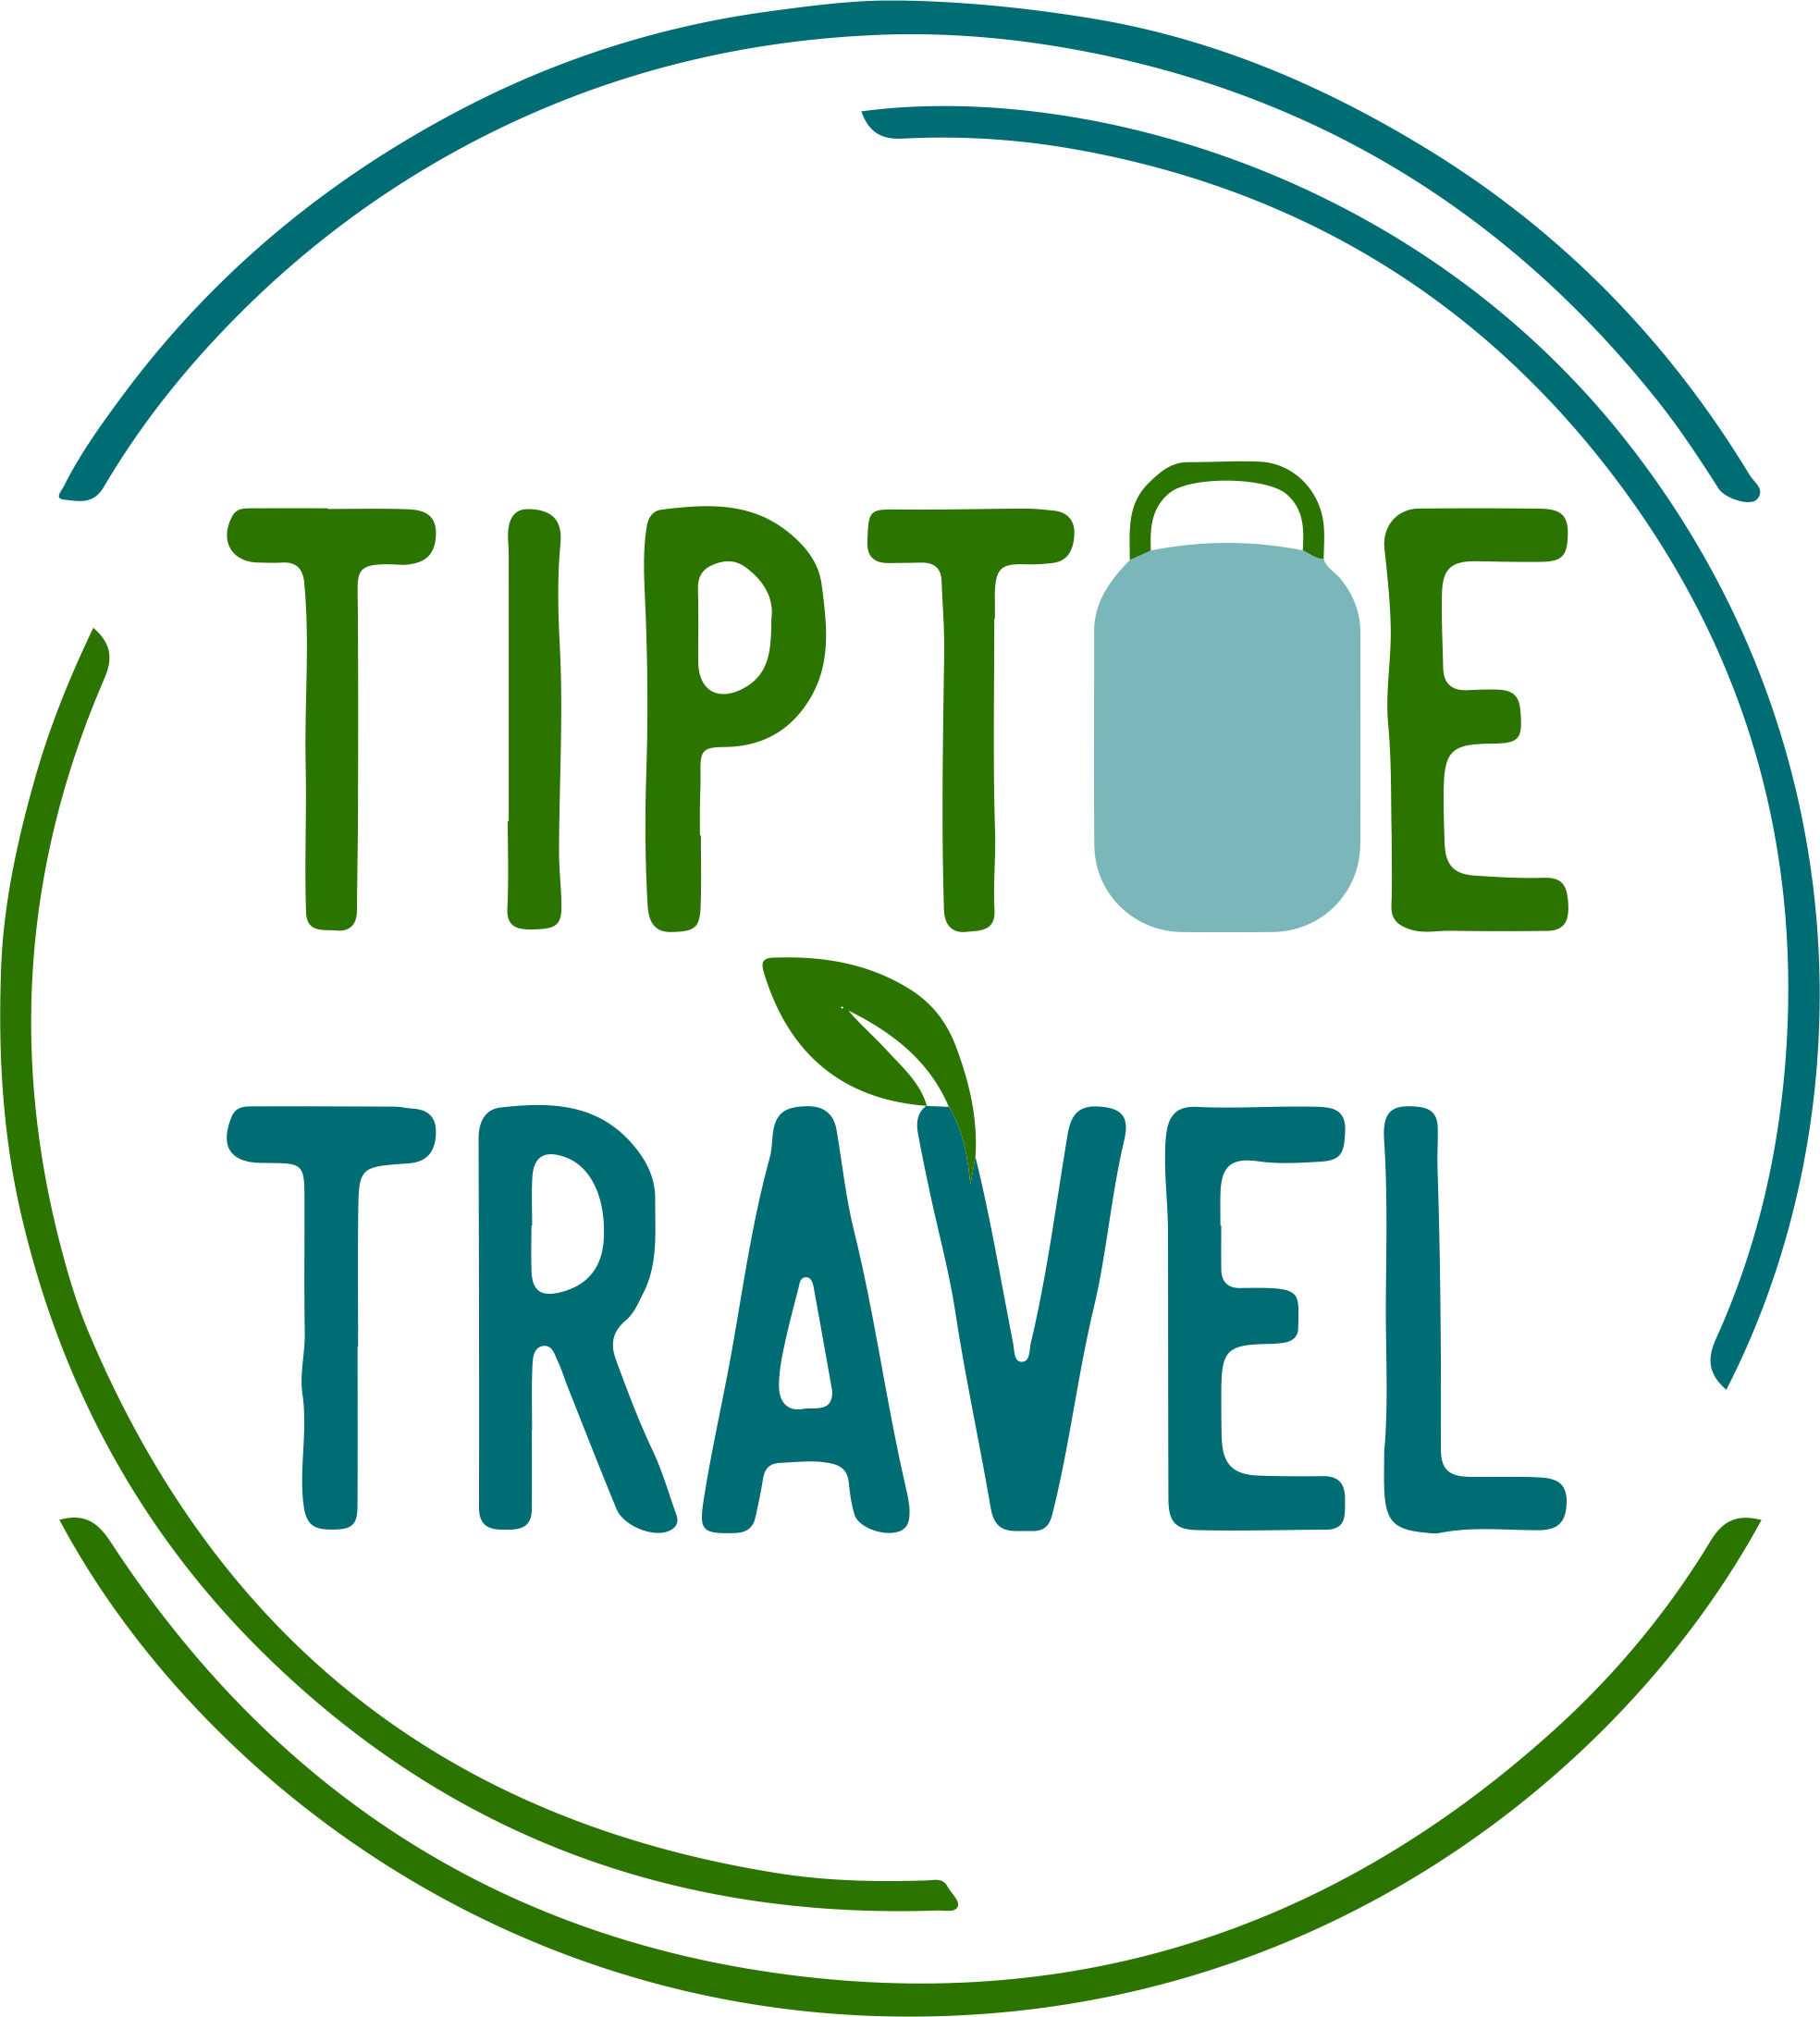 Tiptoe travel